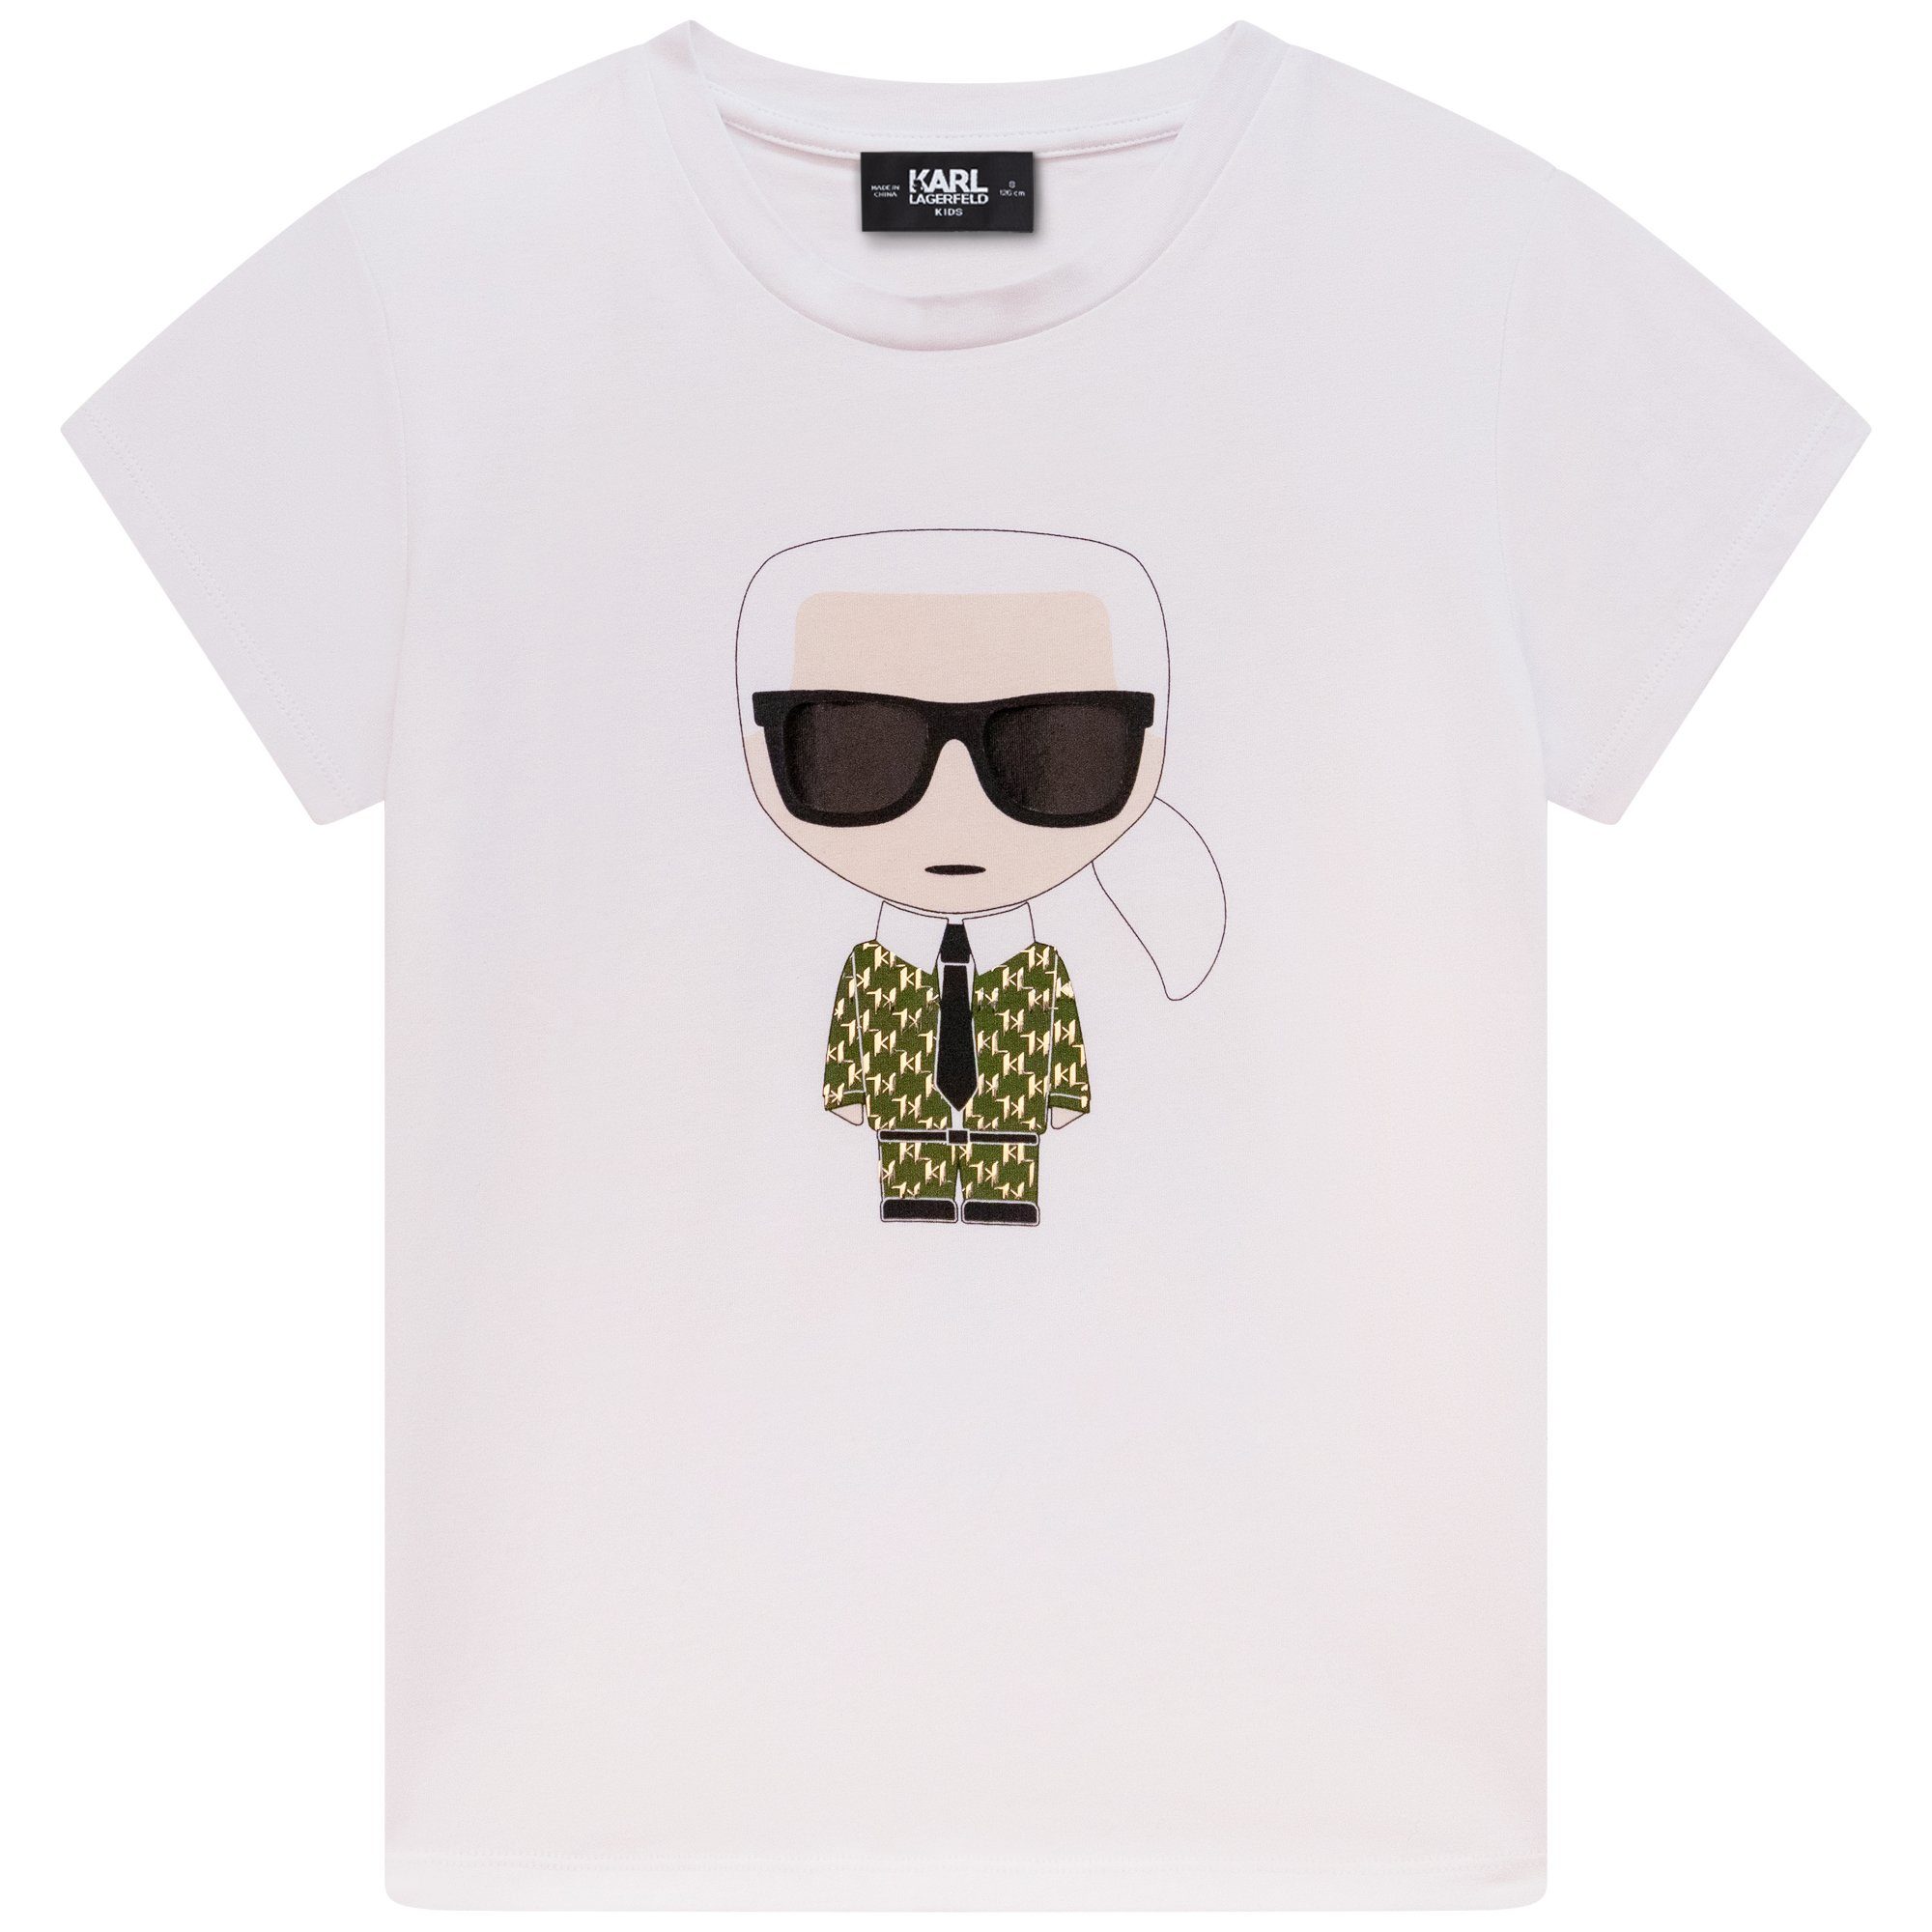 KARL LAGERFELD Print-Shirt Karl Lagerfeld T-Shirt Kids girs